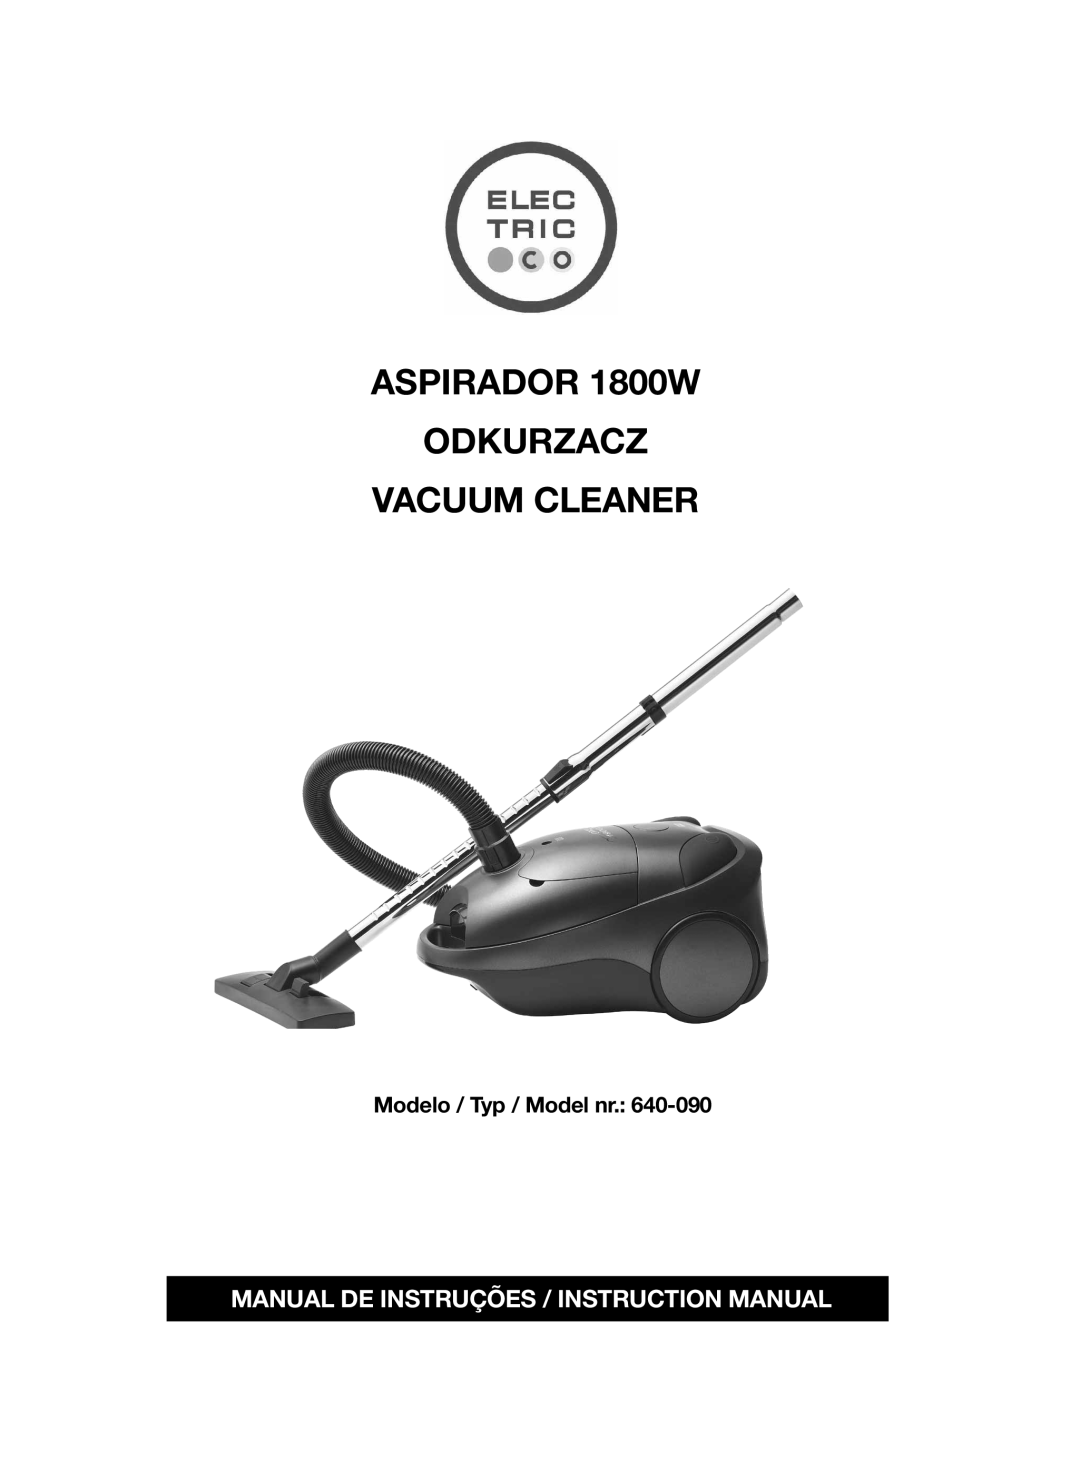 Electric-Spin 640090 manual Modelo / Typ / Model nr, ASPIRADOR 1800W ODKURZACZ VACUUM CLEANER 